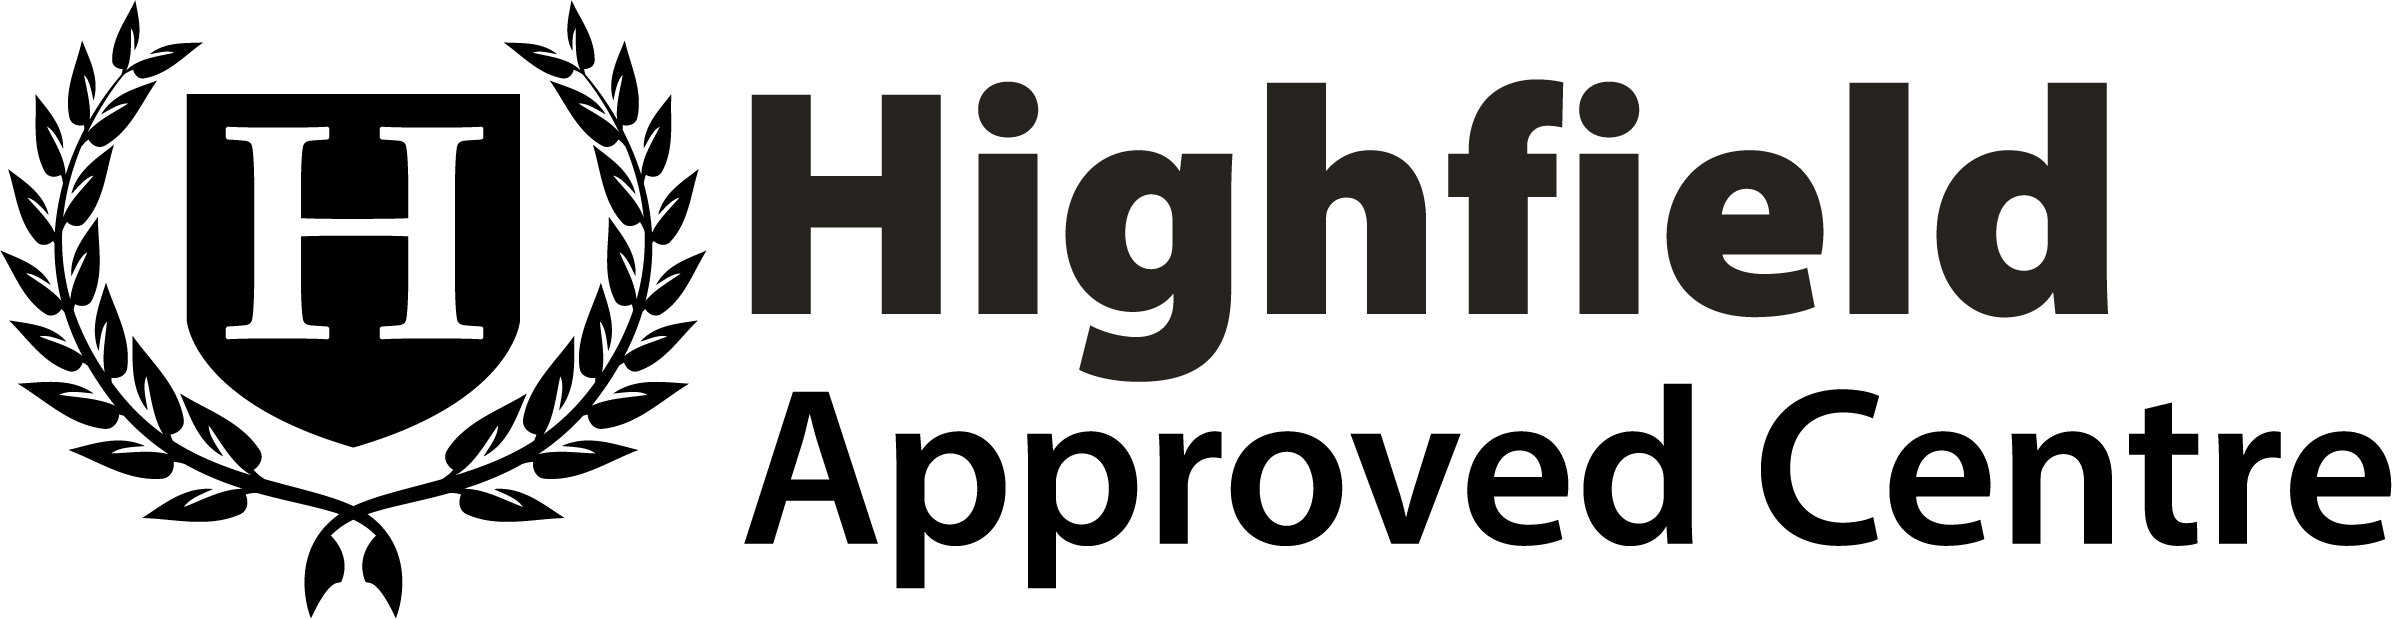 Highfield approved centre logo